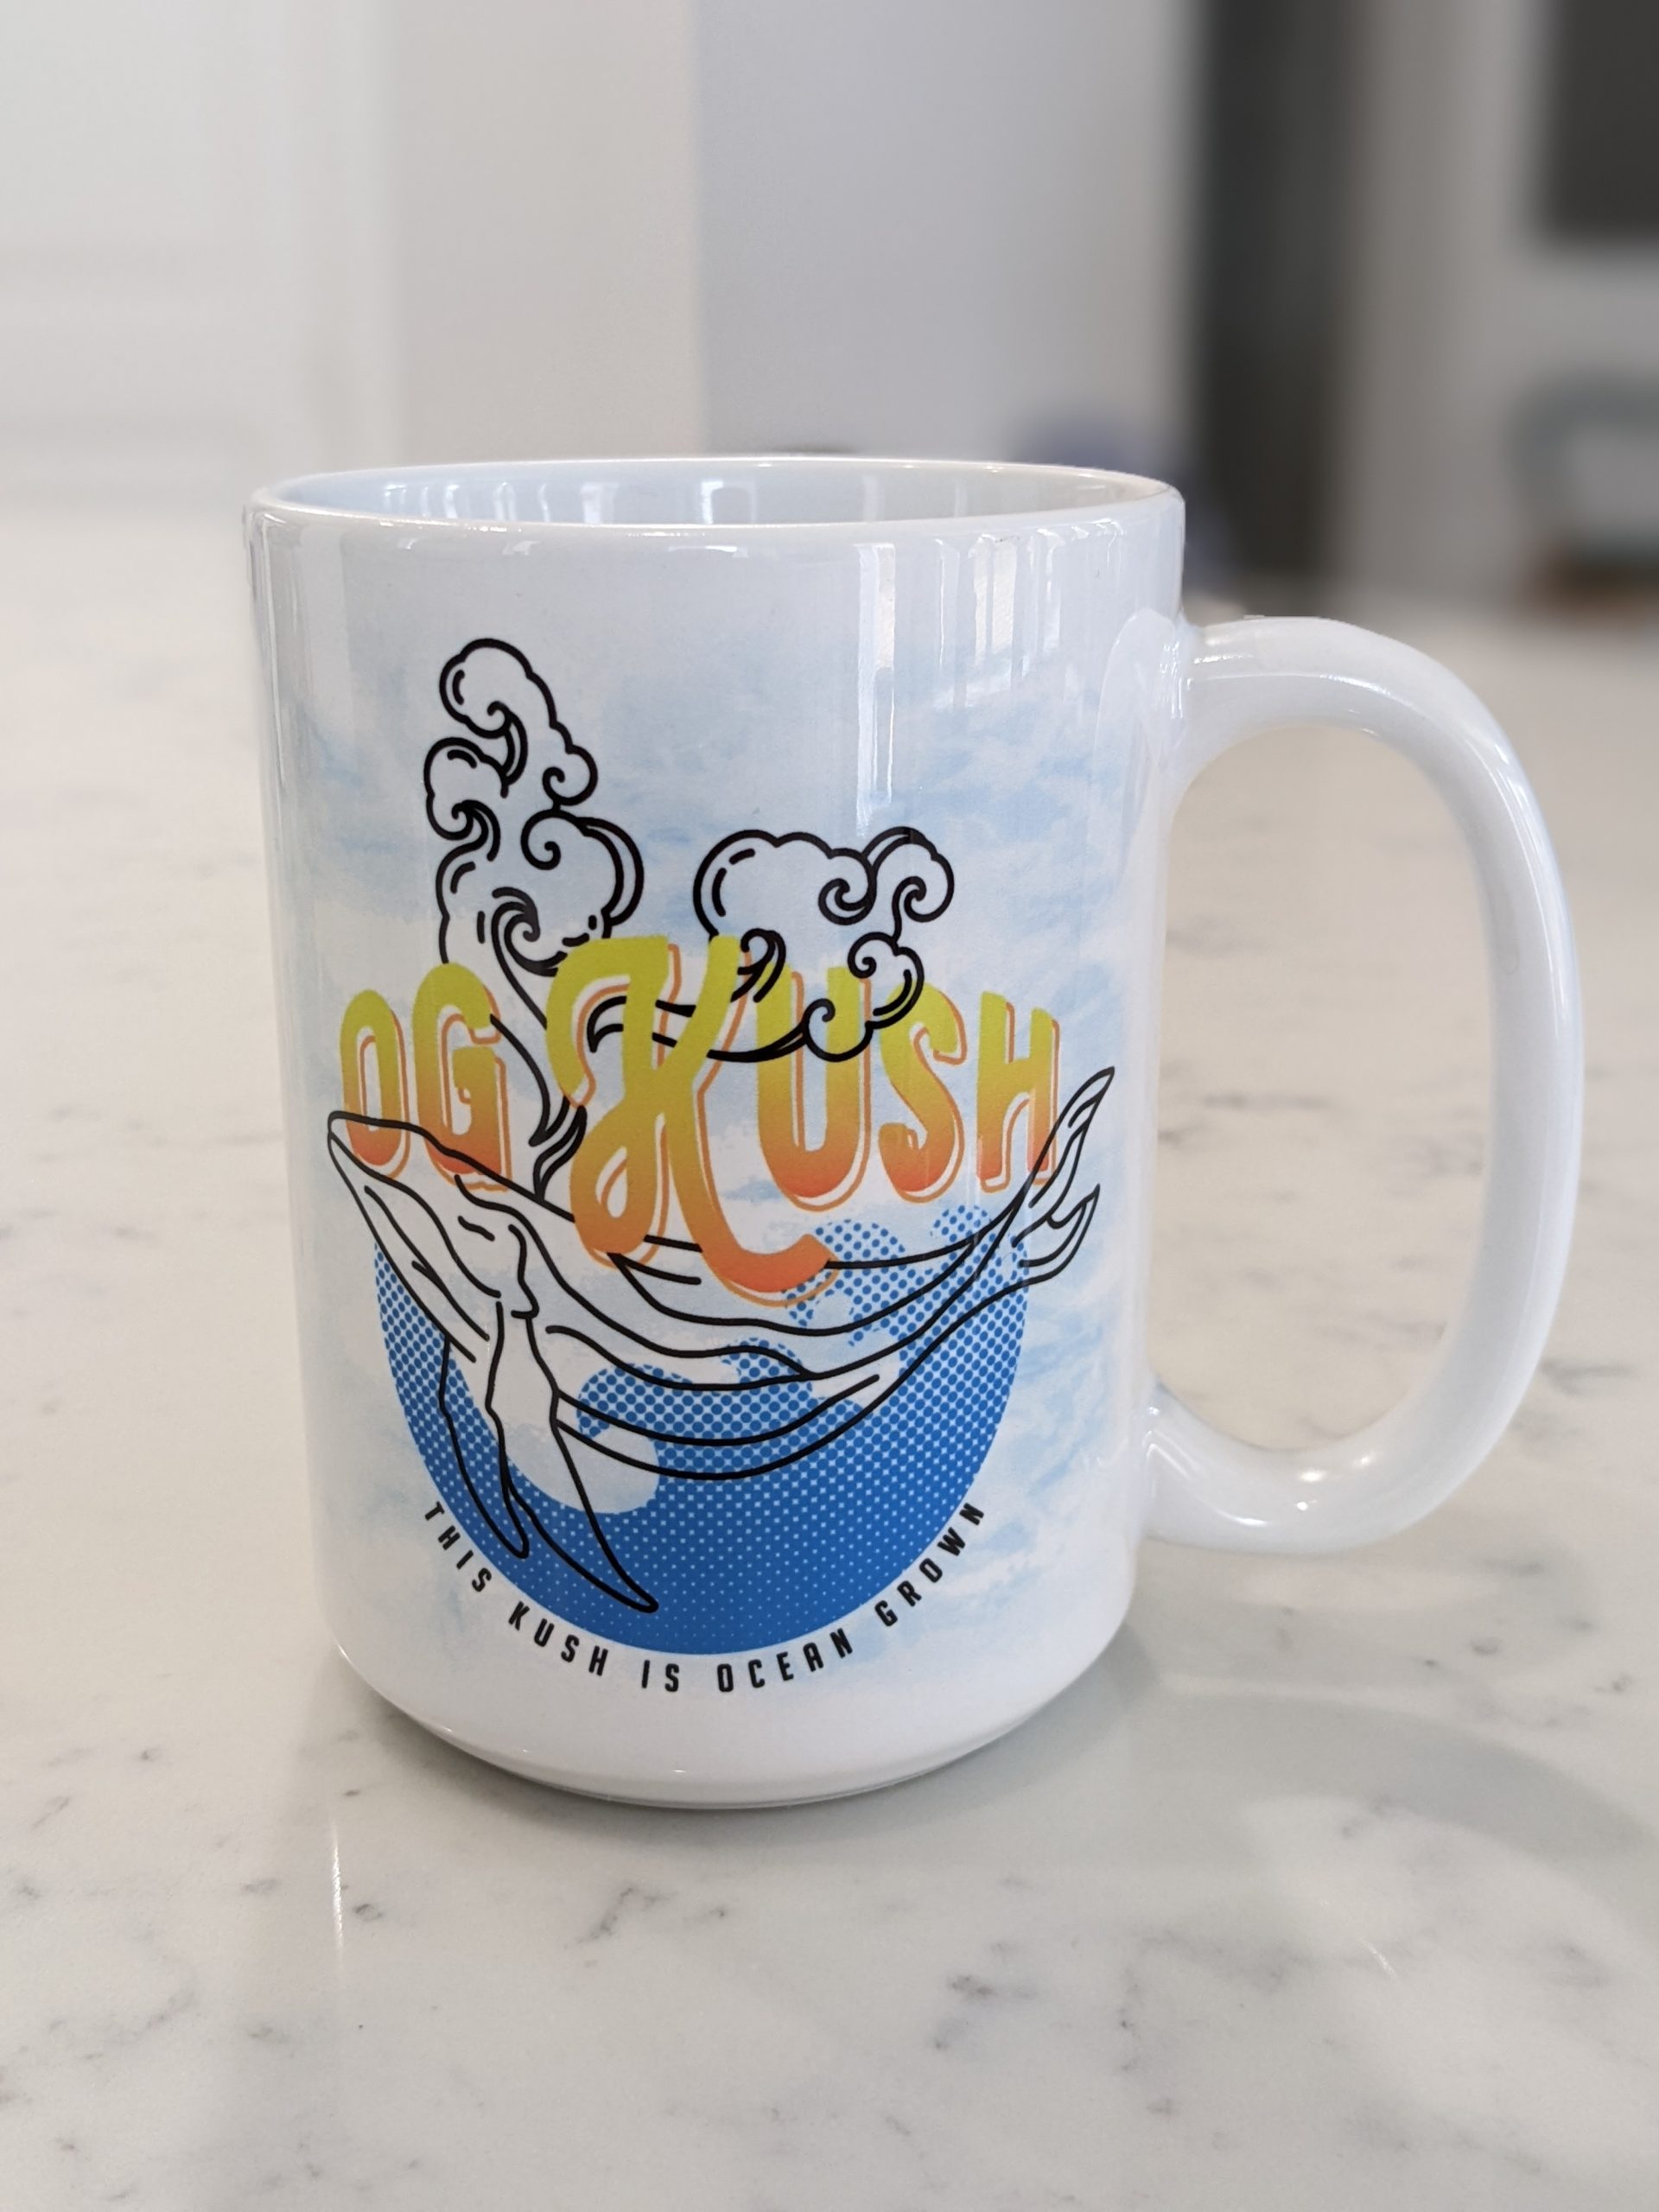 OG Kush “Ocean Grown” 15oz Ceramic Mug